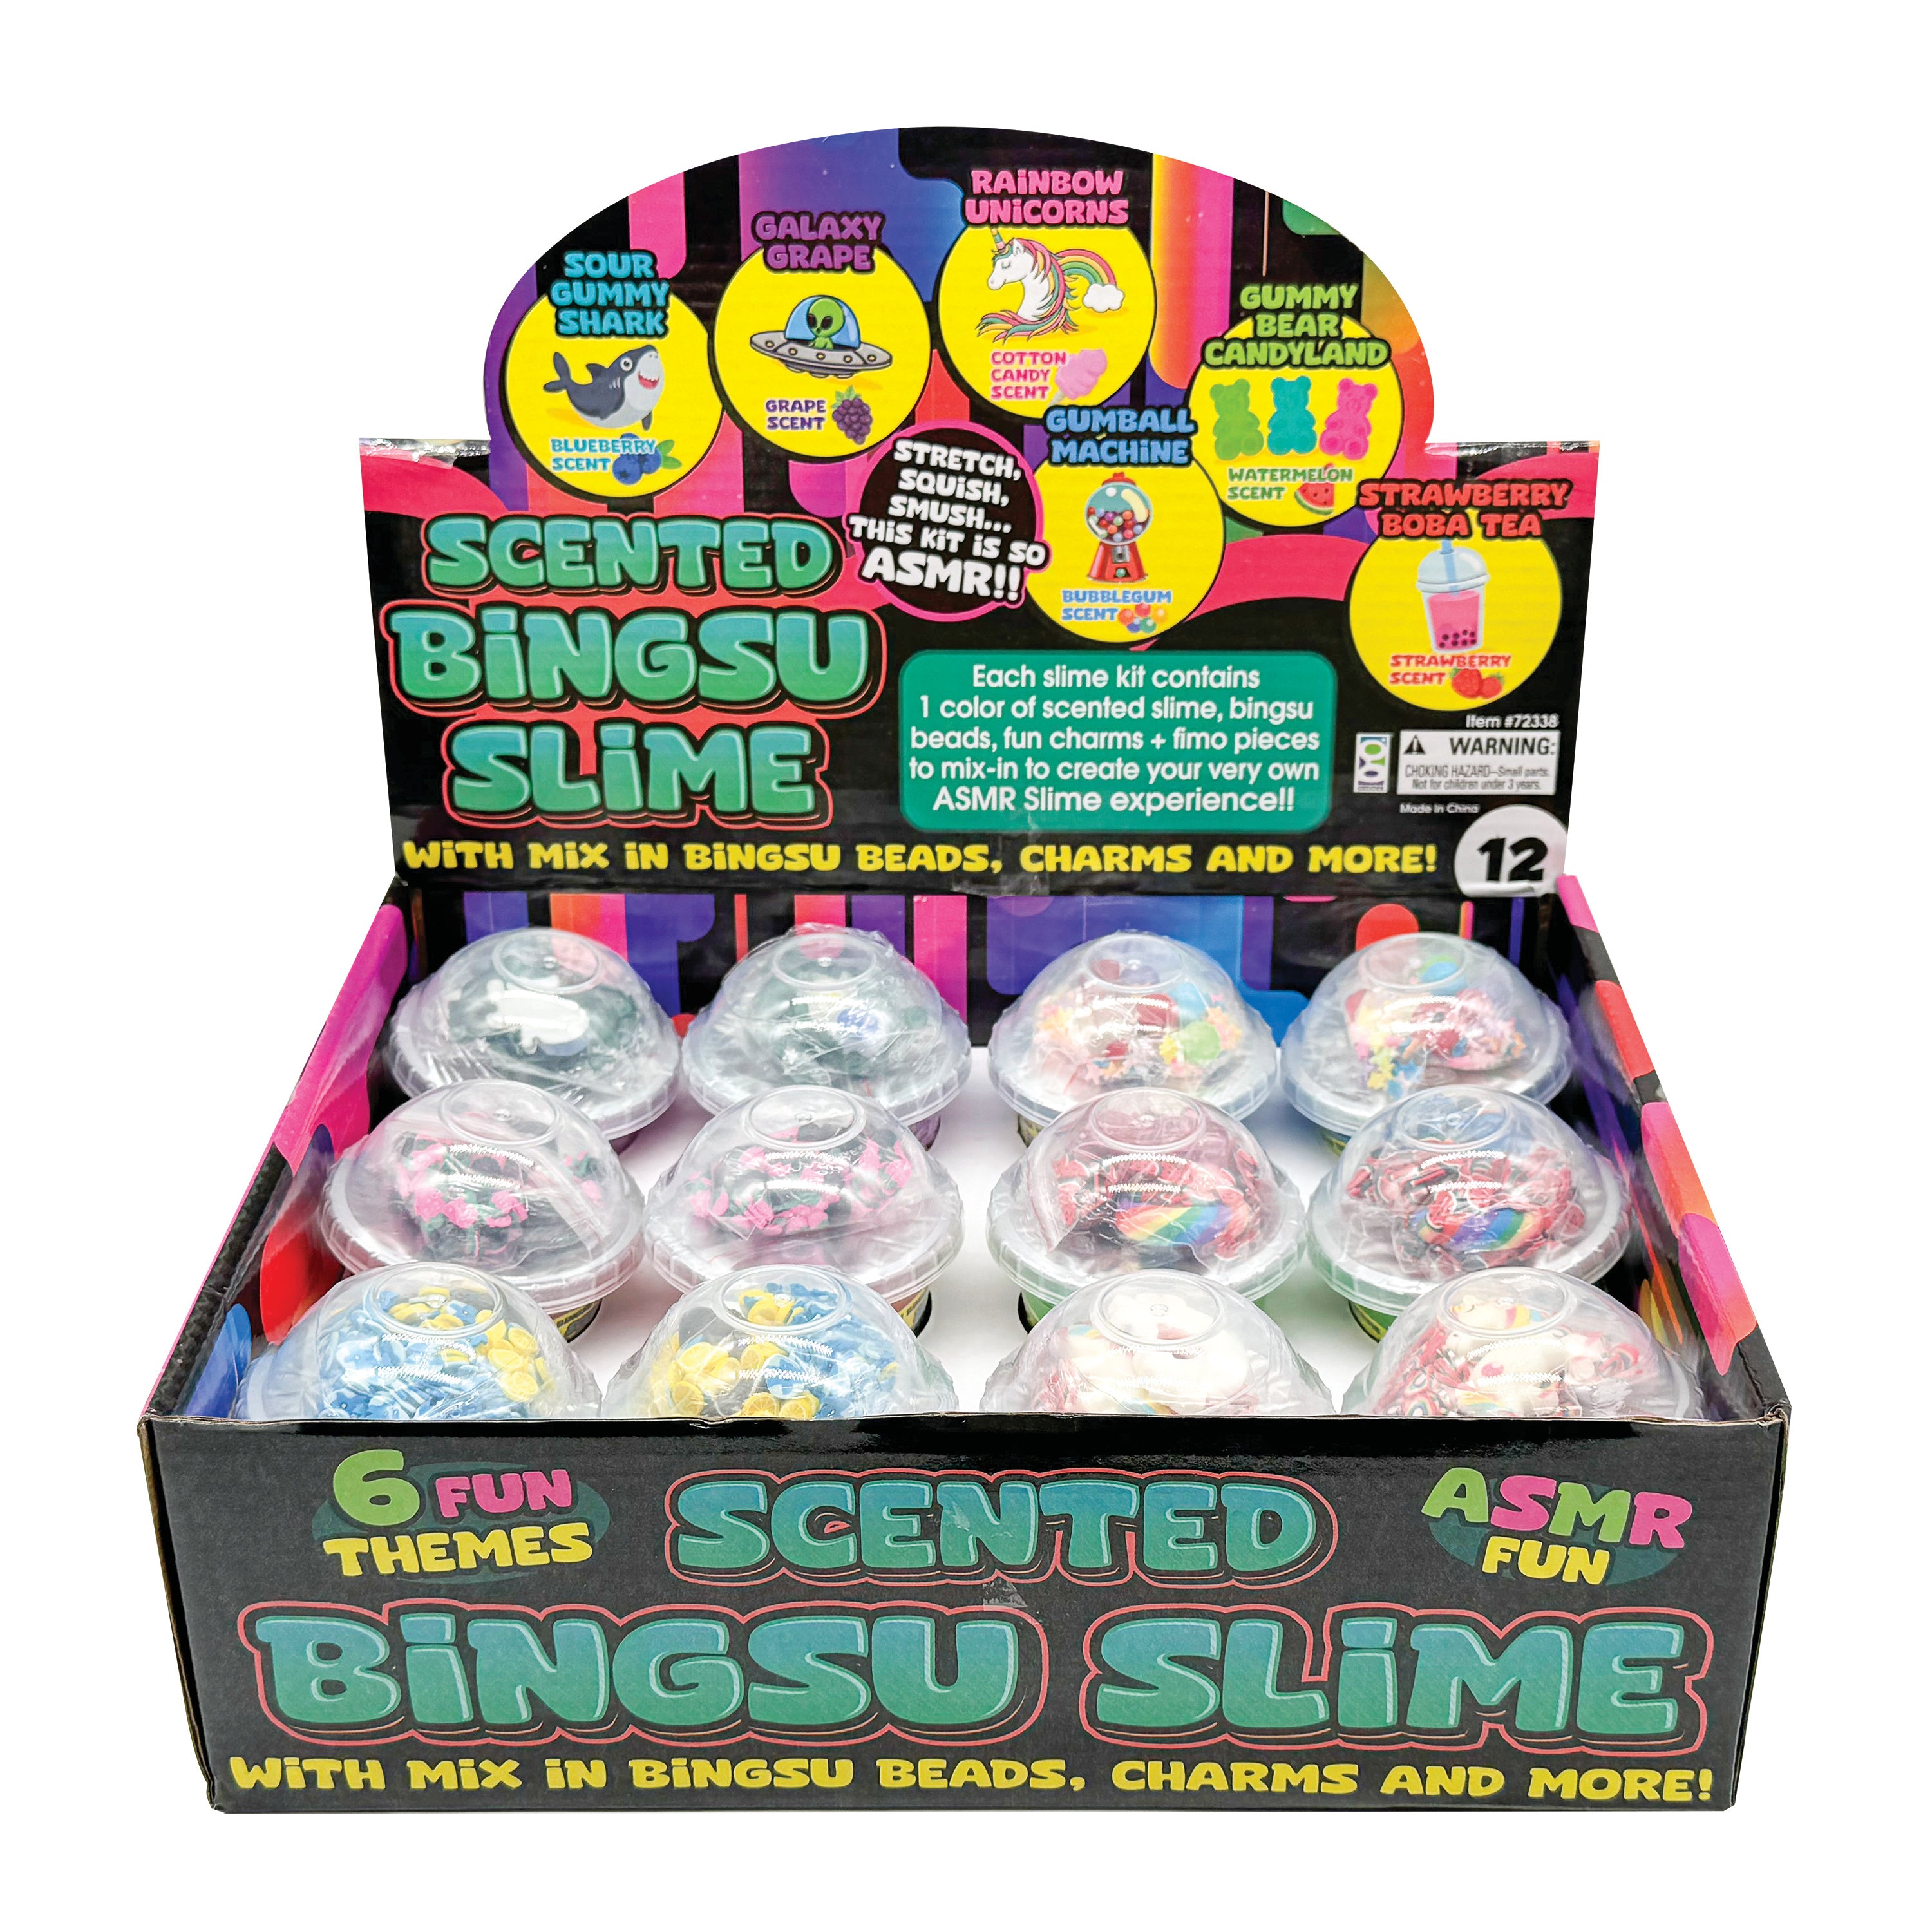 Scented Bingsu Slime